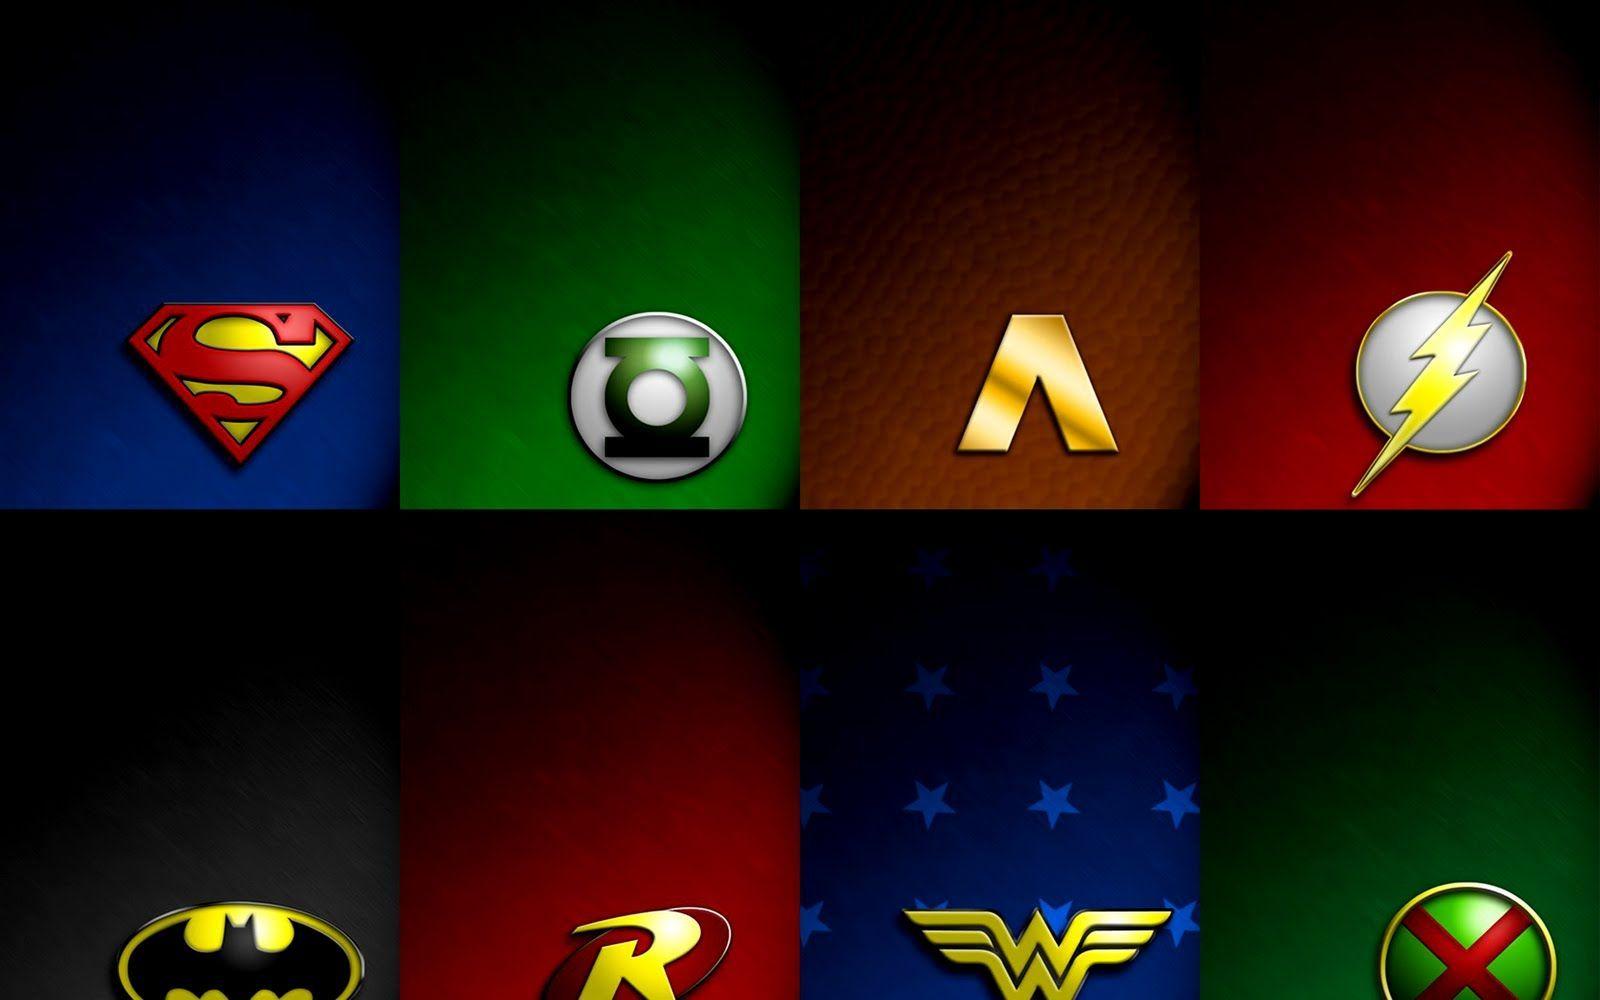 superheroes logo wallpaper. Camera Webfreind. Dc comics